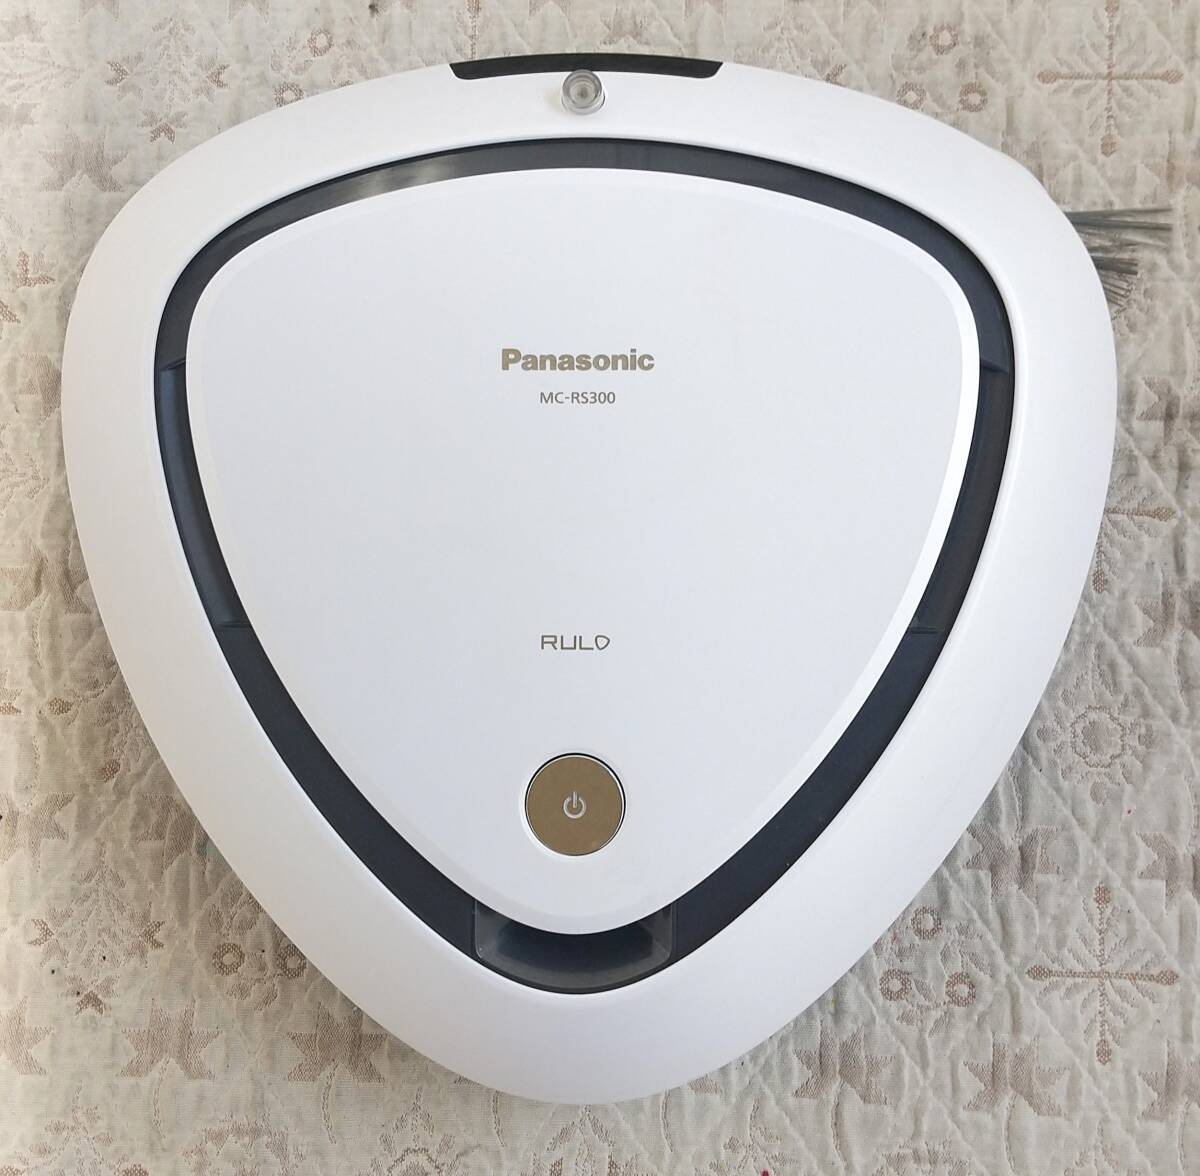 [885] secondhand goods Panasonic MC-RS300-W robot vacuum cleaner 2018 year made 